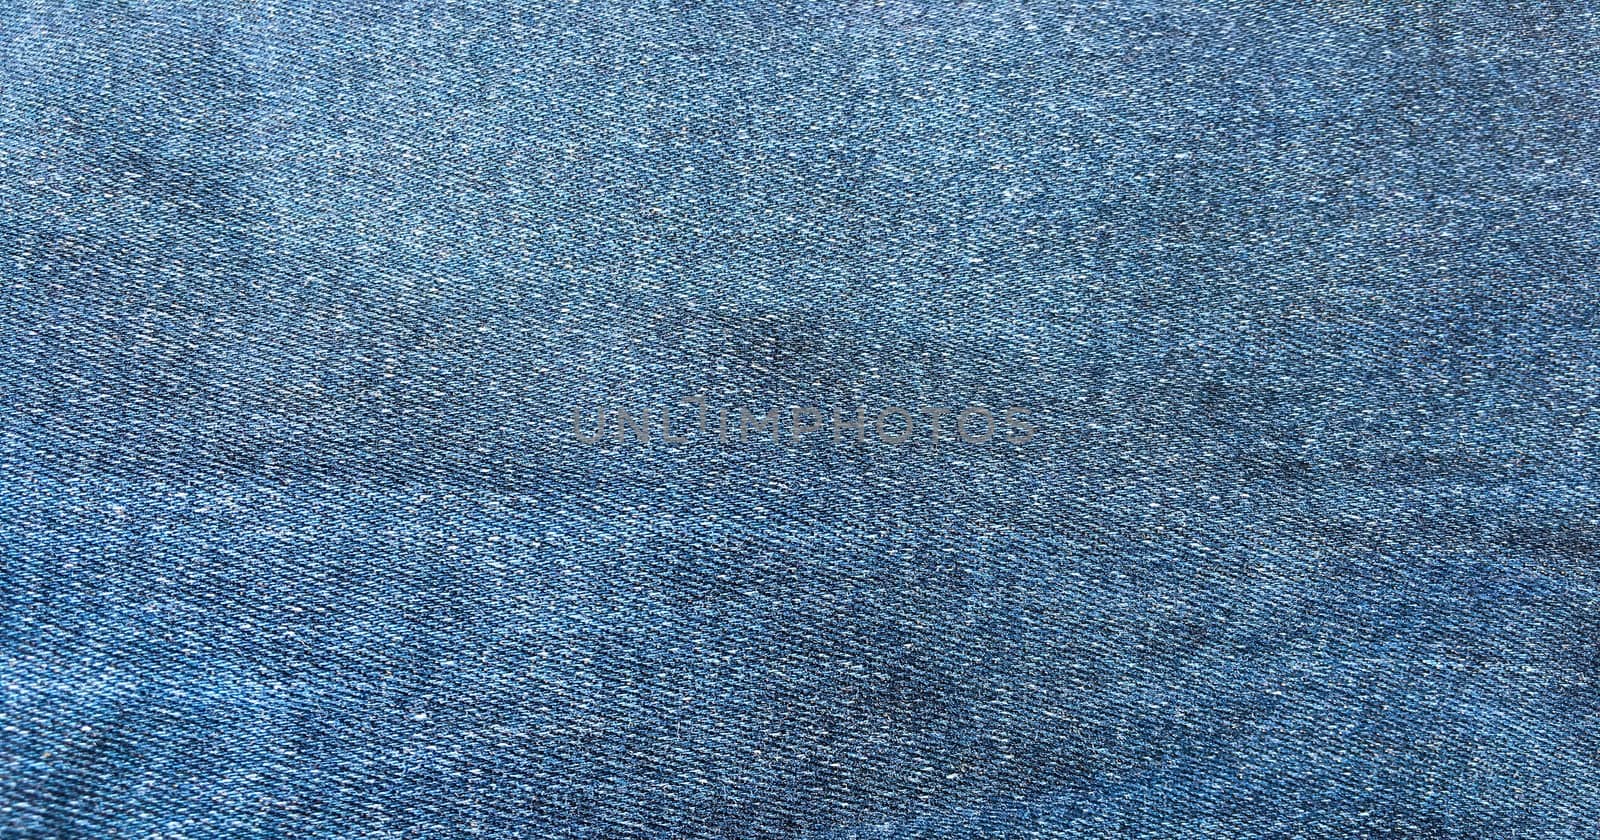 Denim jeans background, Jeans texture, denim fabric. Blue background. by titco